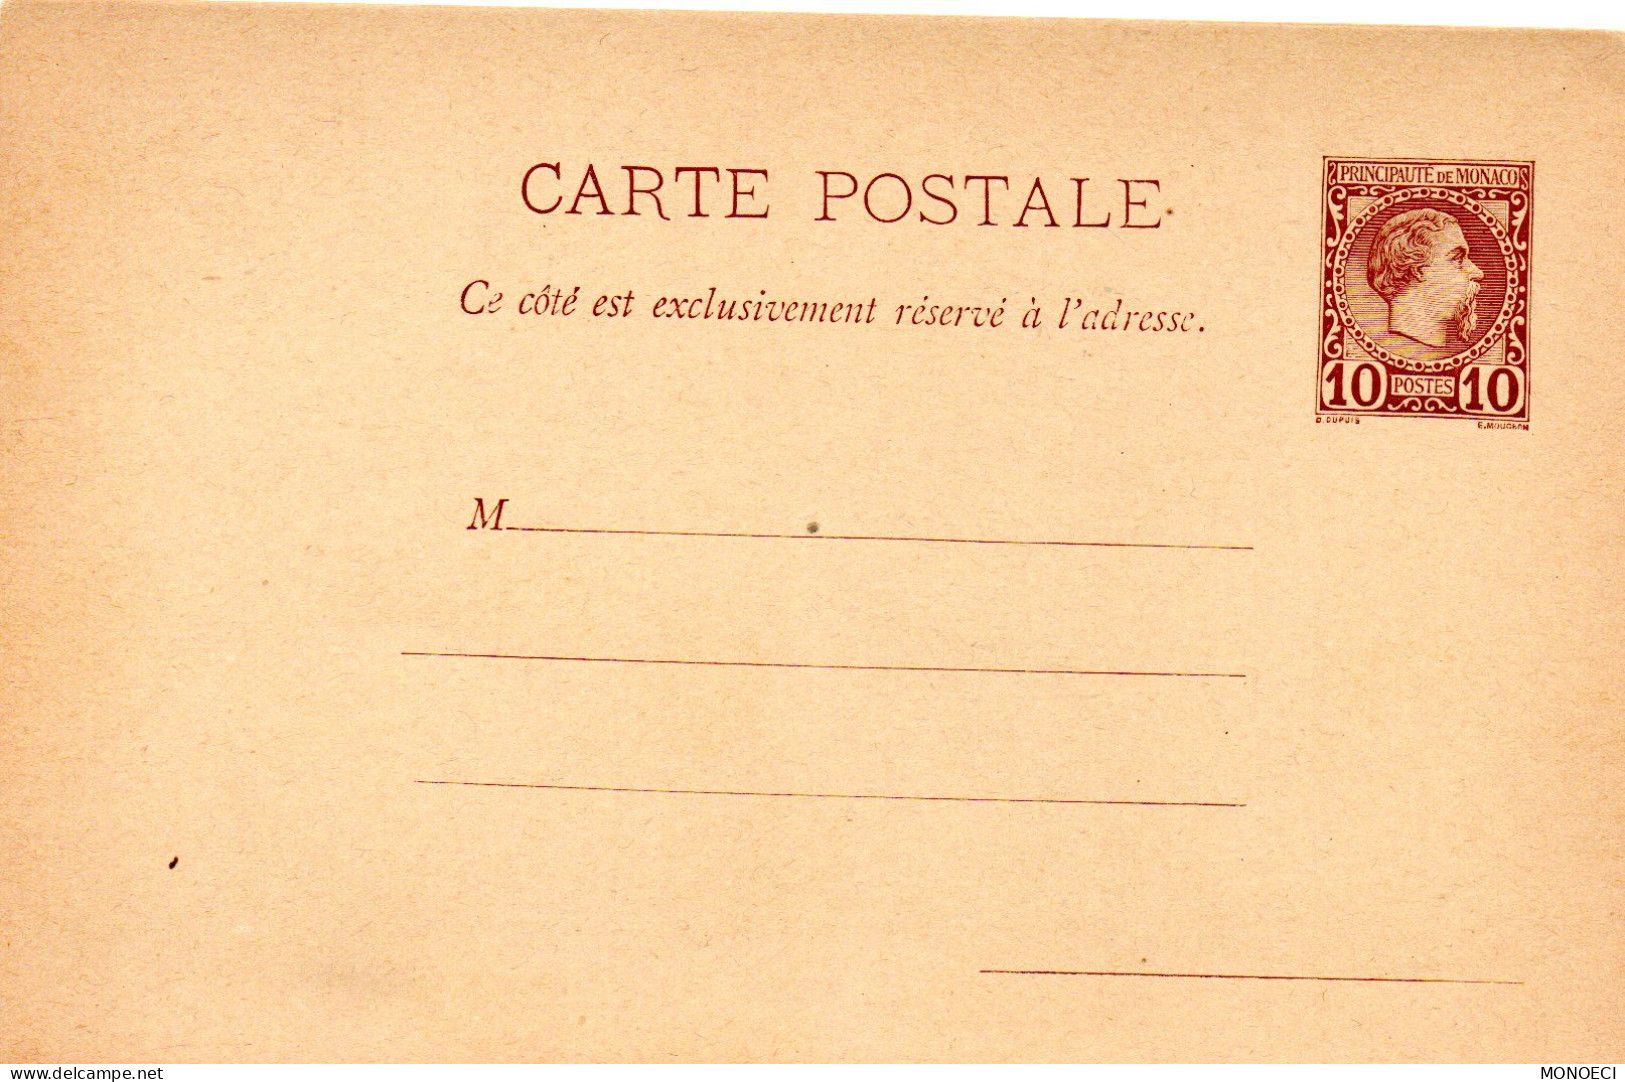 MONACO -- MONTE CARLO -- Entier Postal -- Carte Postale -- 10 C. Brun Sur Jaune Paille Prince Charles III - Entiers Postaux